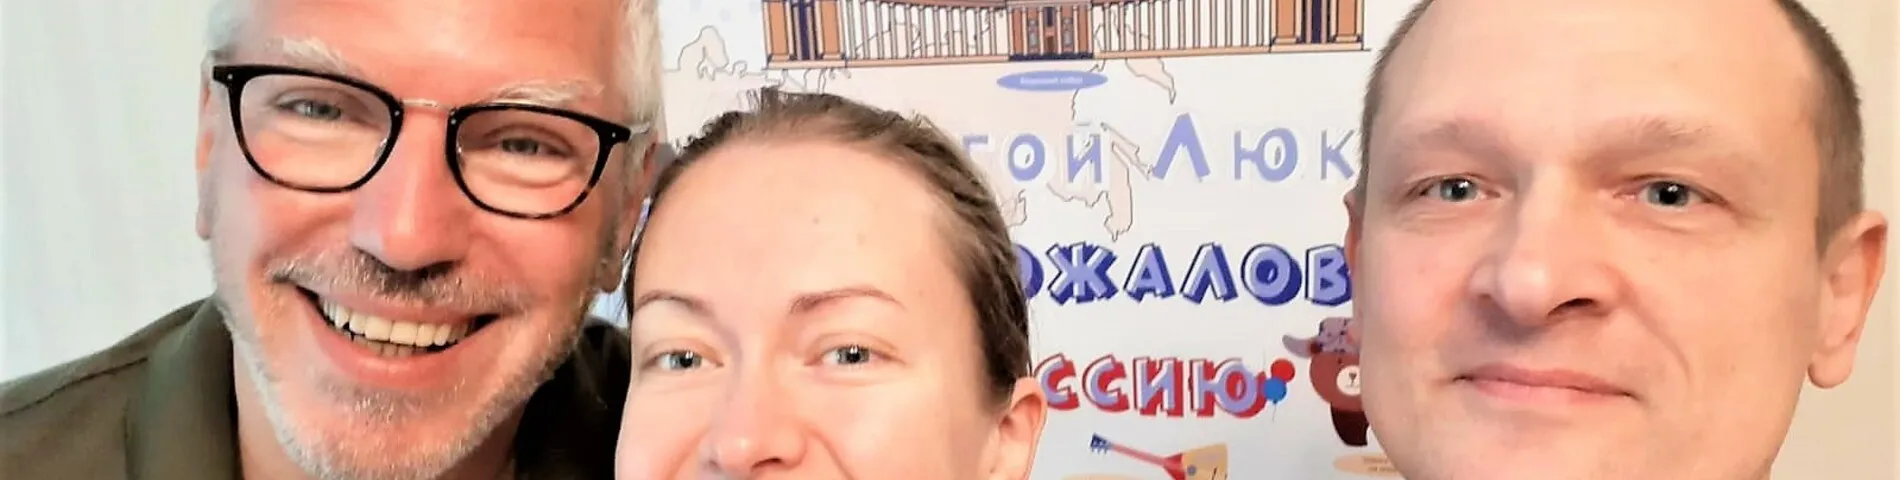 Ruslingua Russian Language School画像1